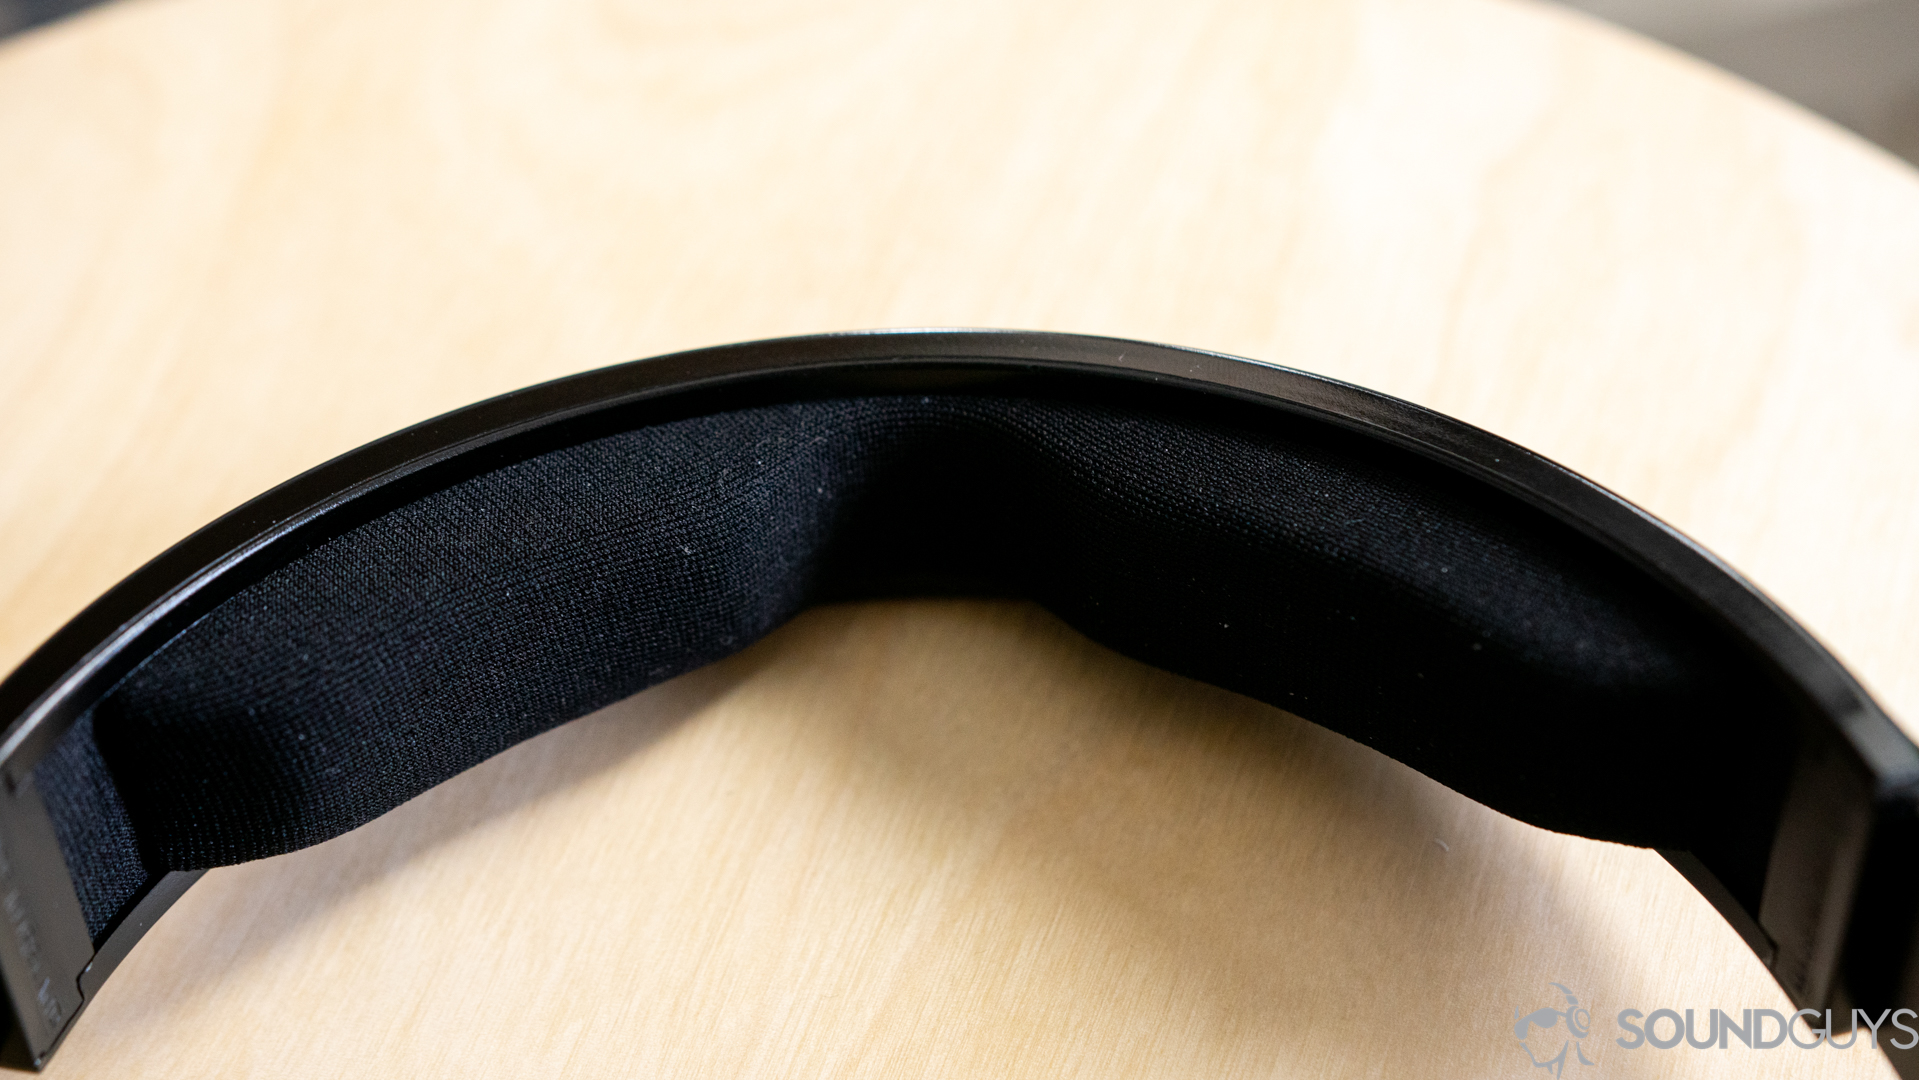 Close-up of the padding of the Sennheiser headphones.